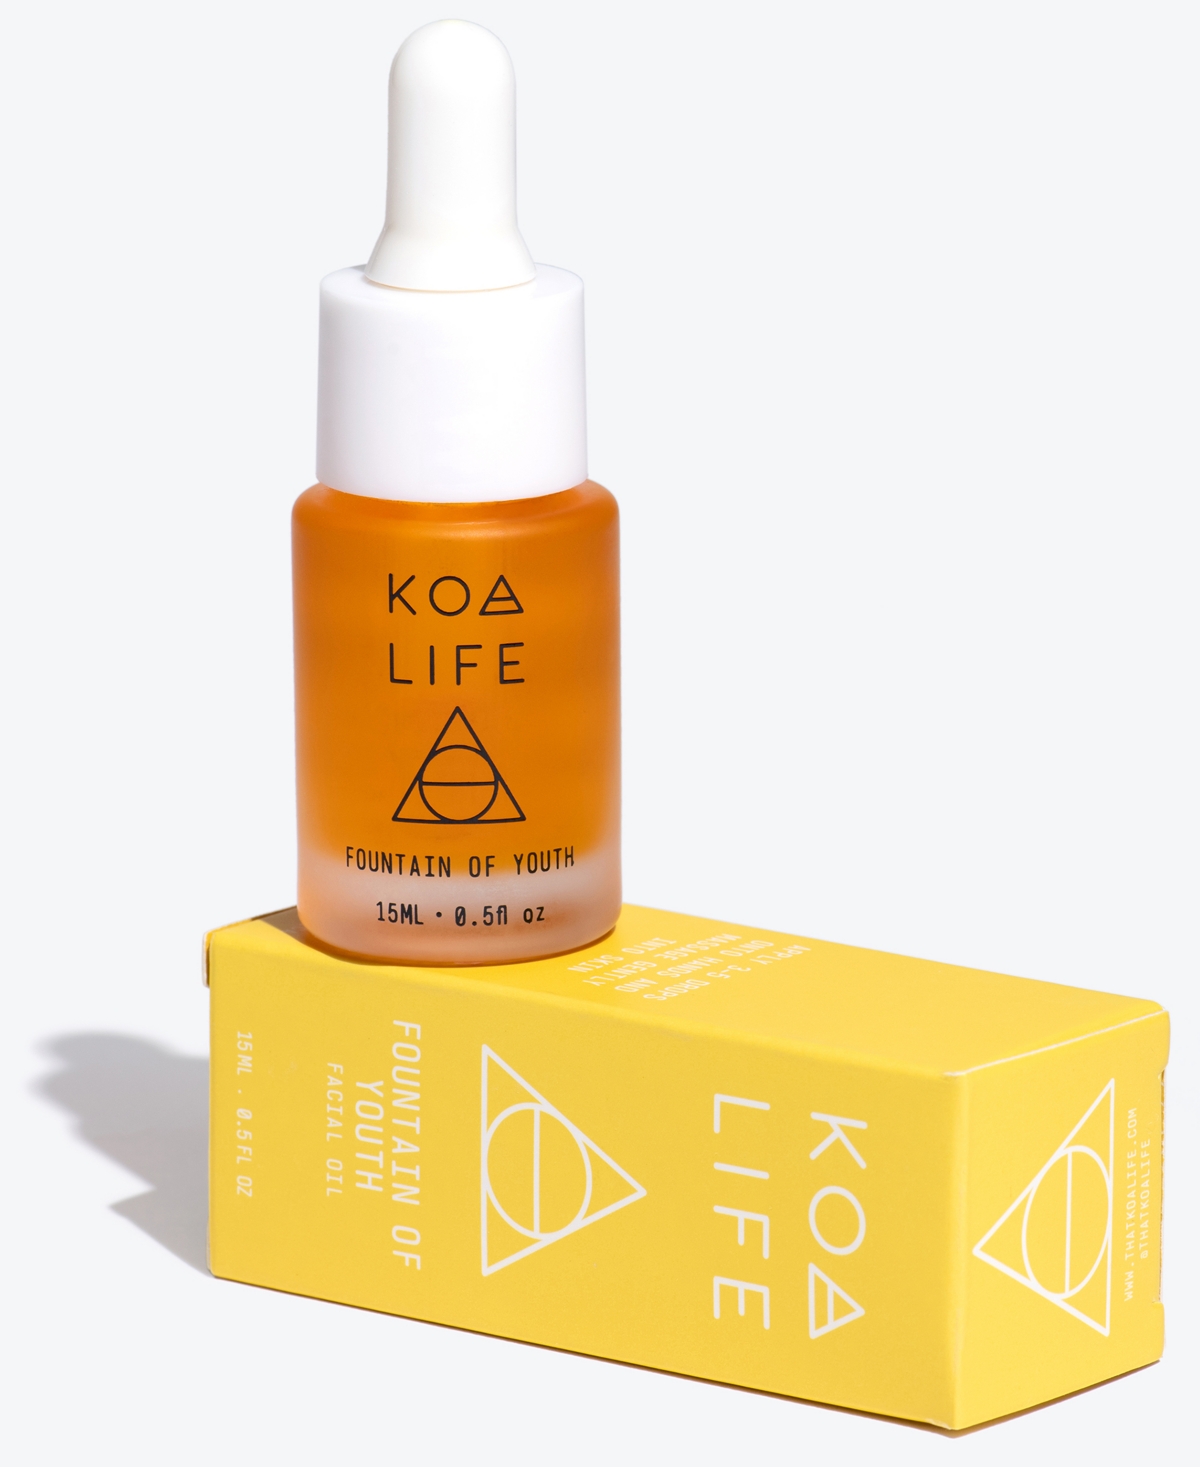 Koa Life Fountain of Youth Facial Oil, 15 ml